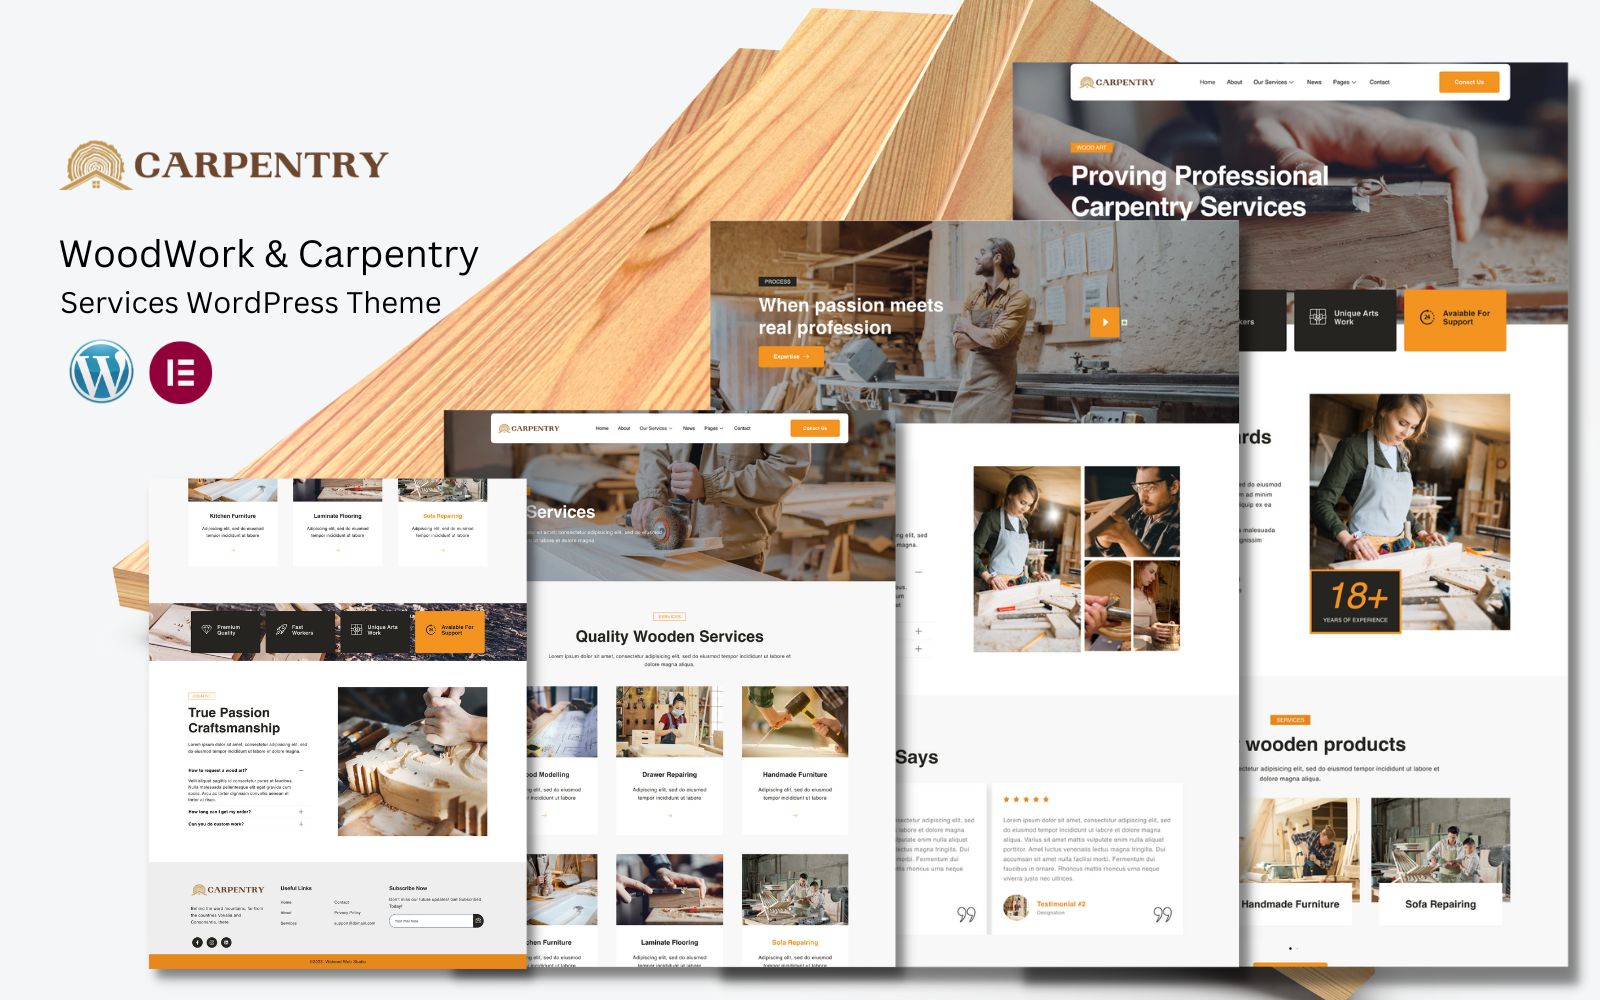 Carpentry - WoodWork & Carpentry Services WordPress Services